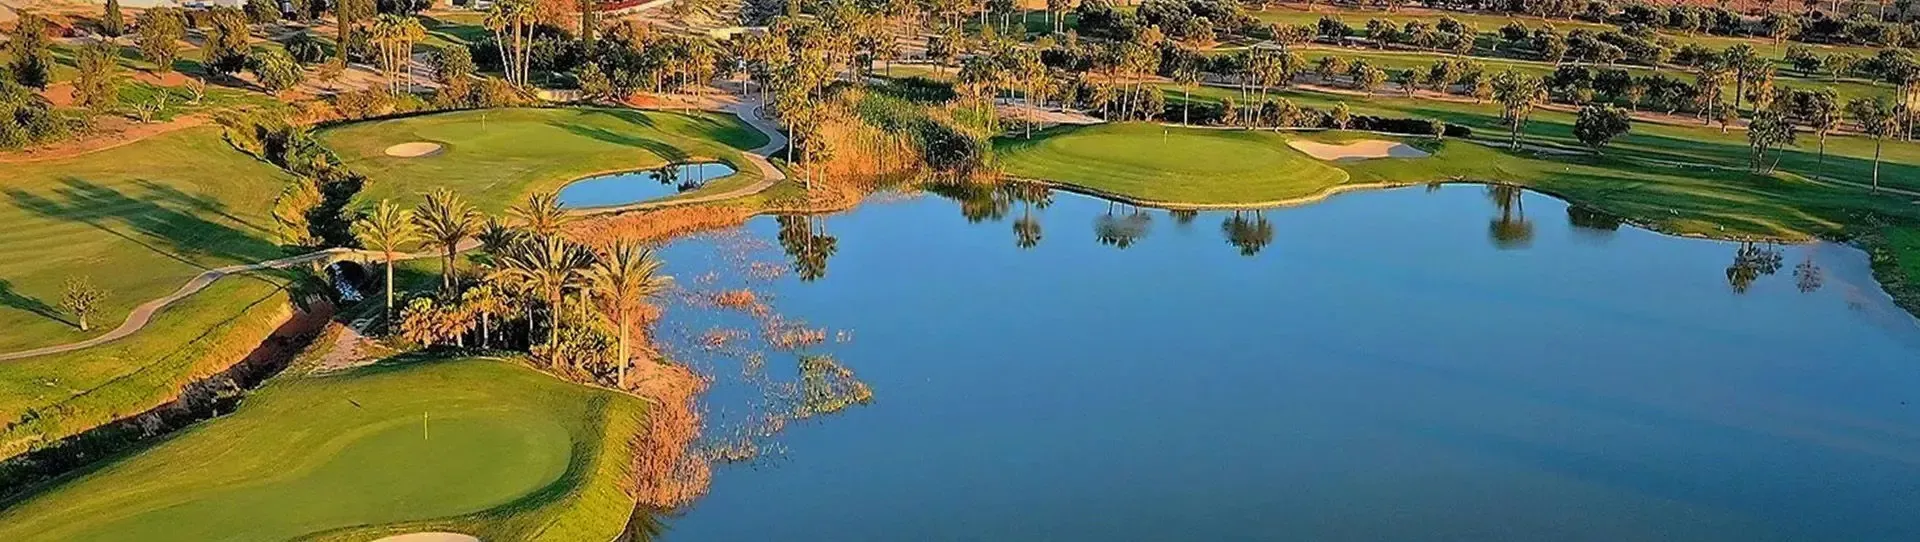 Spain golf courses - La Finca Golf Course - Photo 1